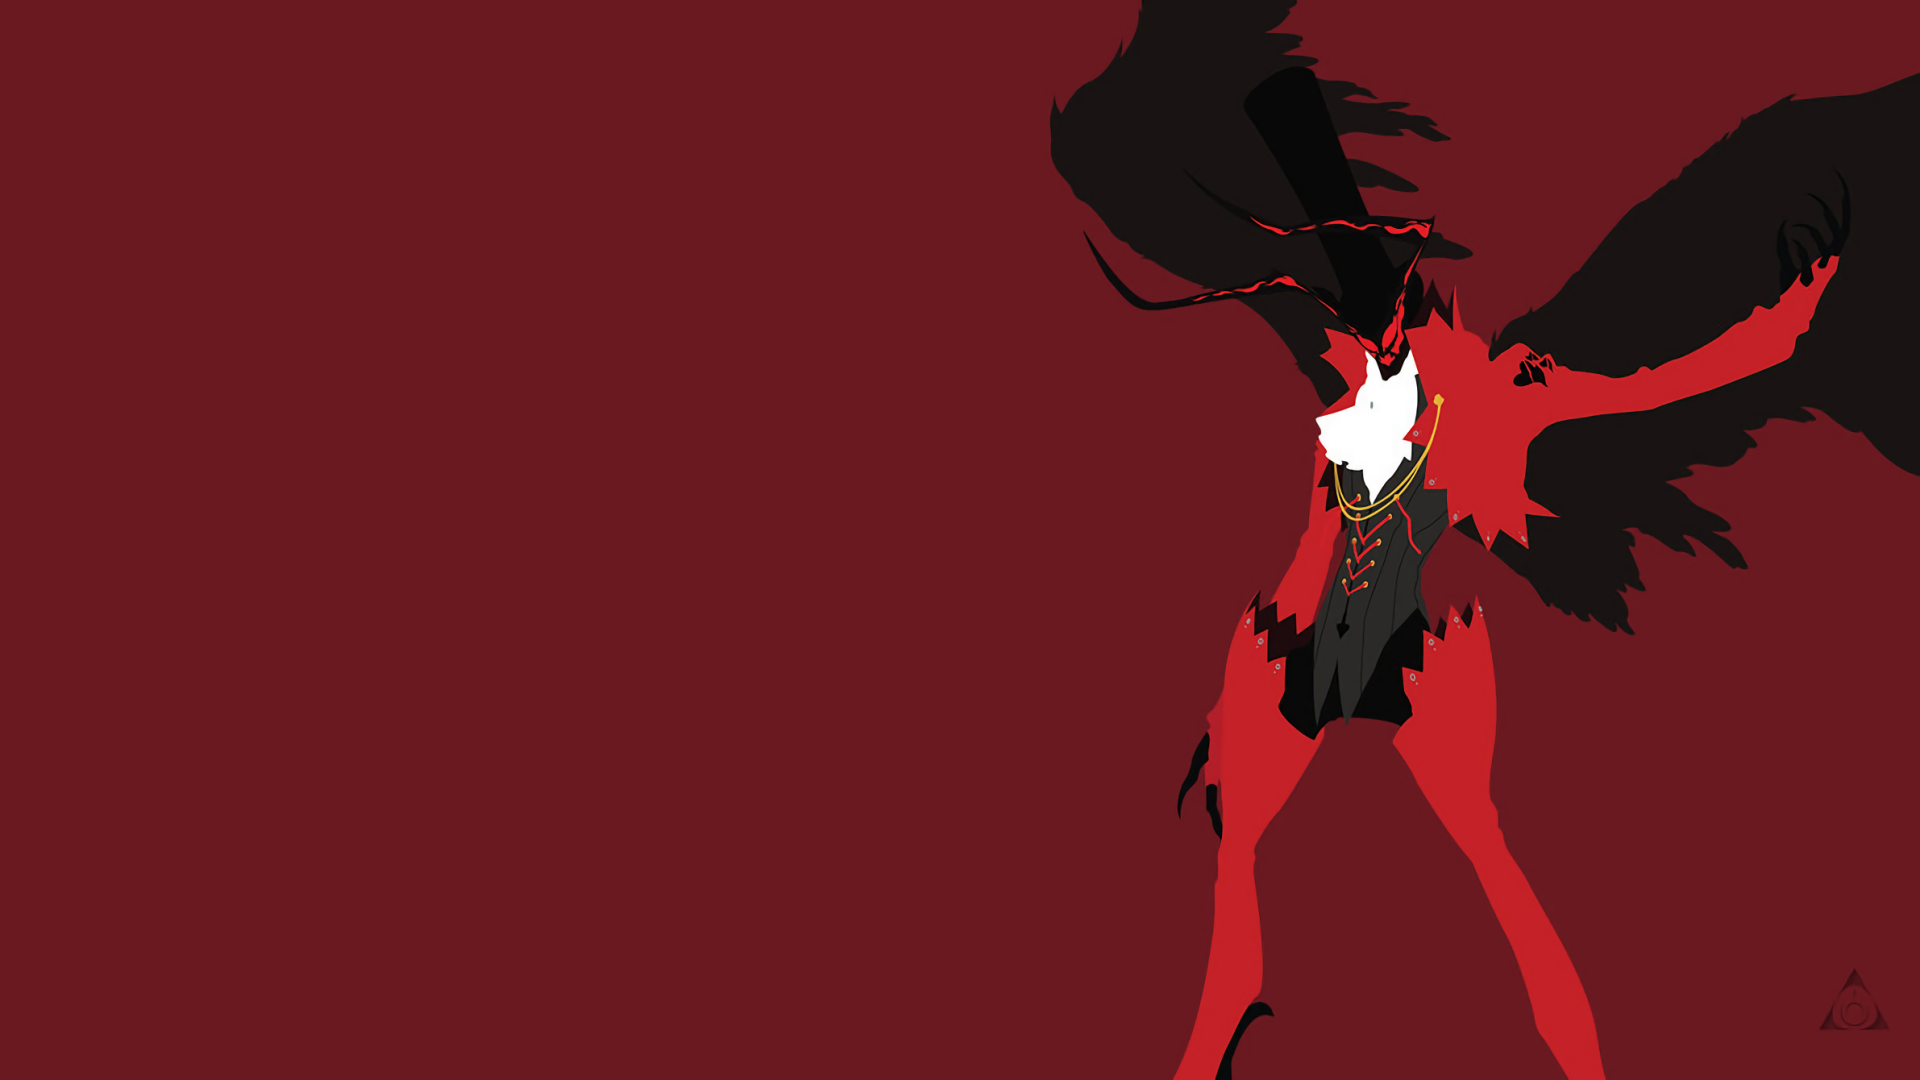 Persona 5 HD Wallpaper